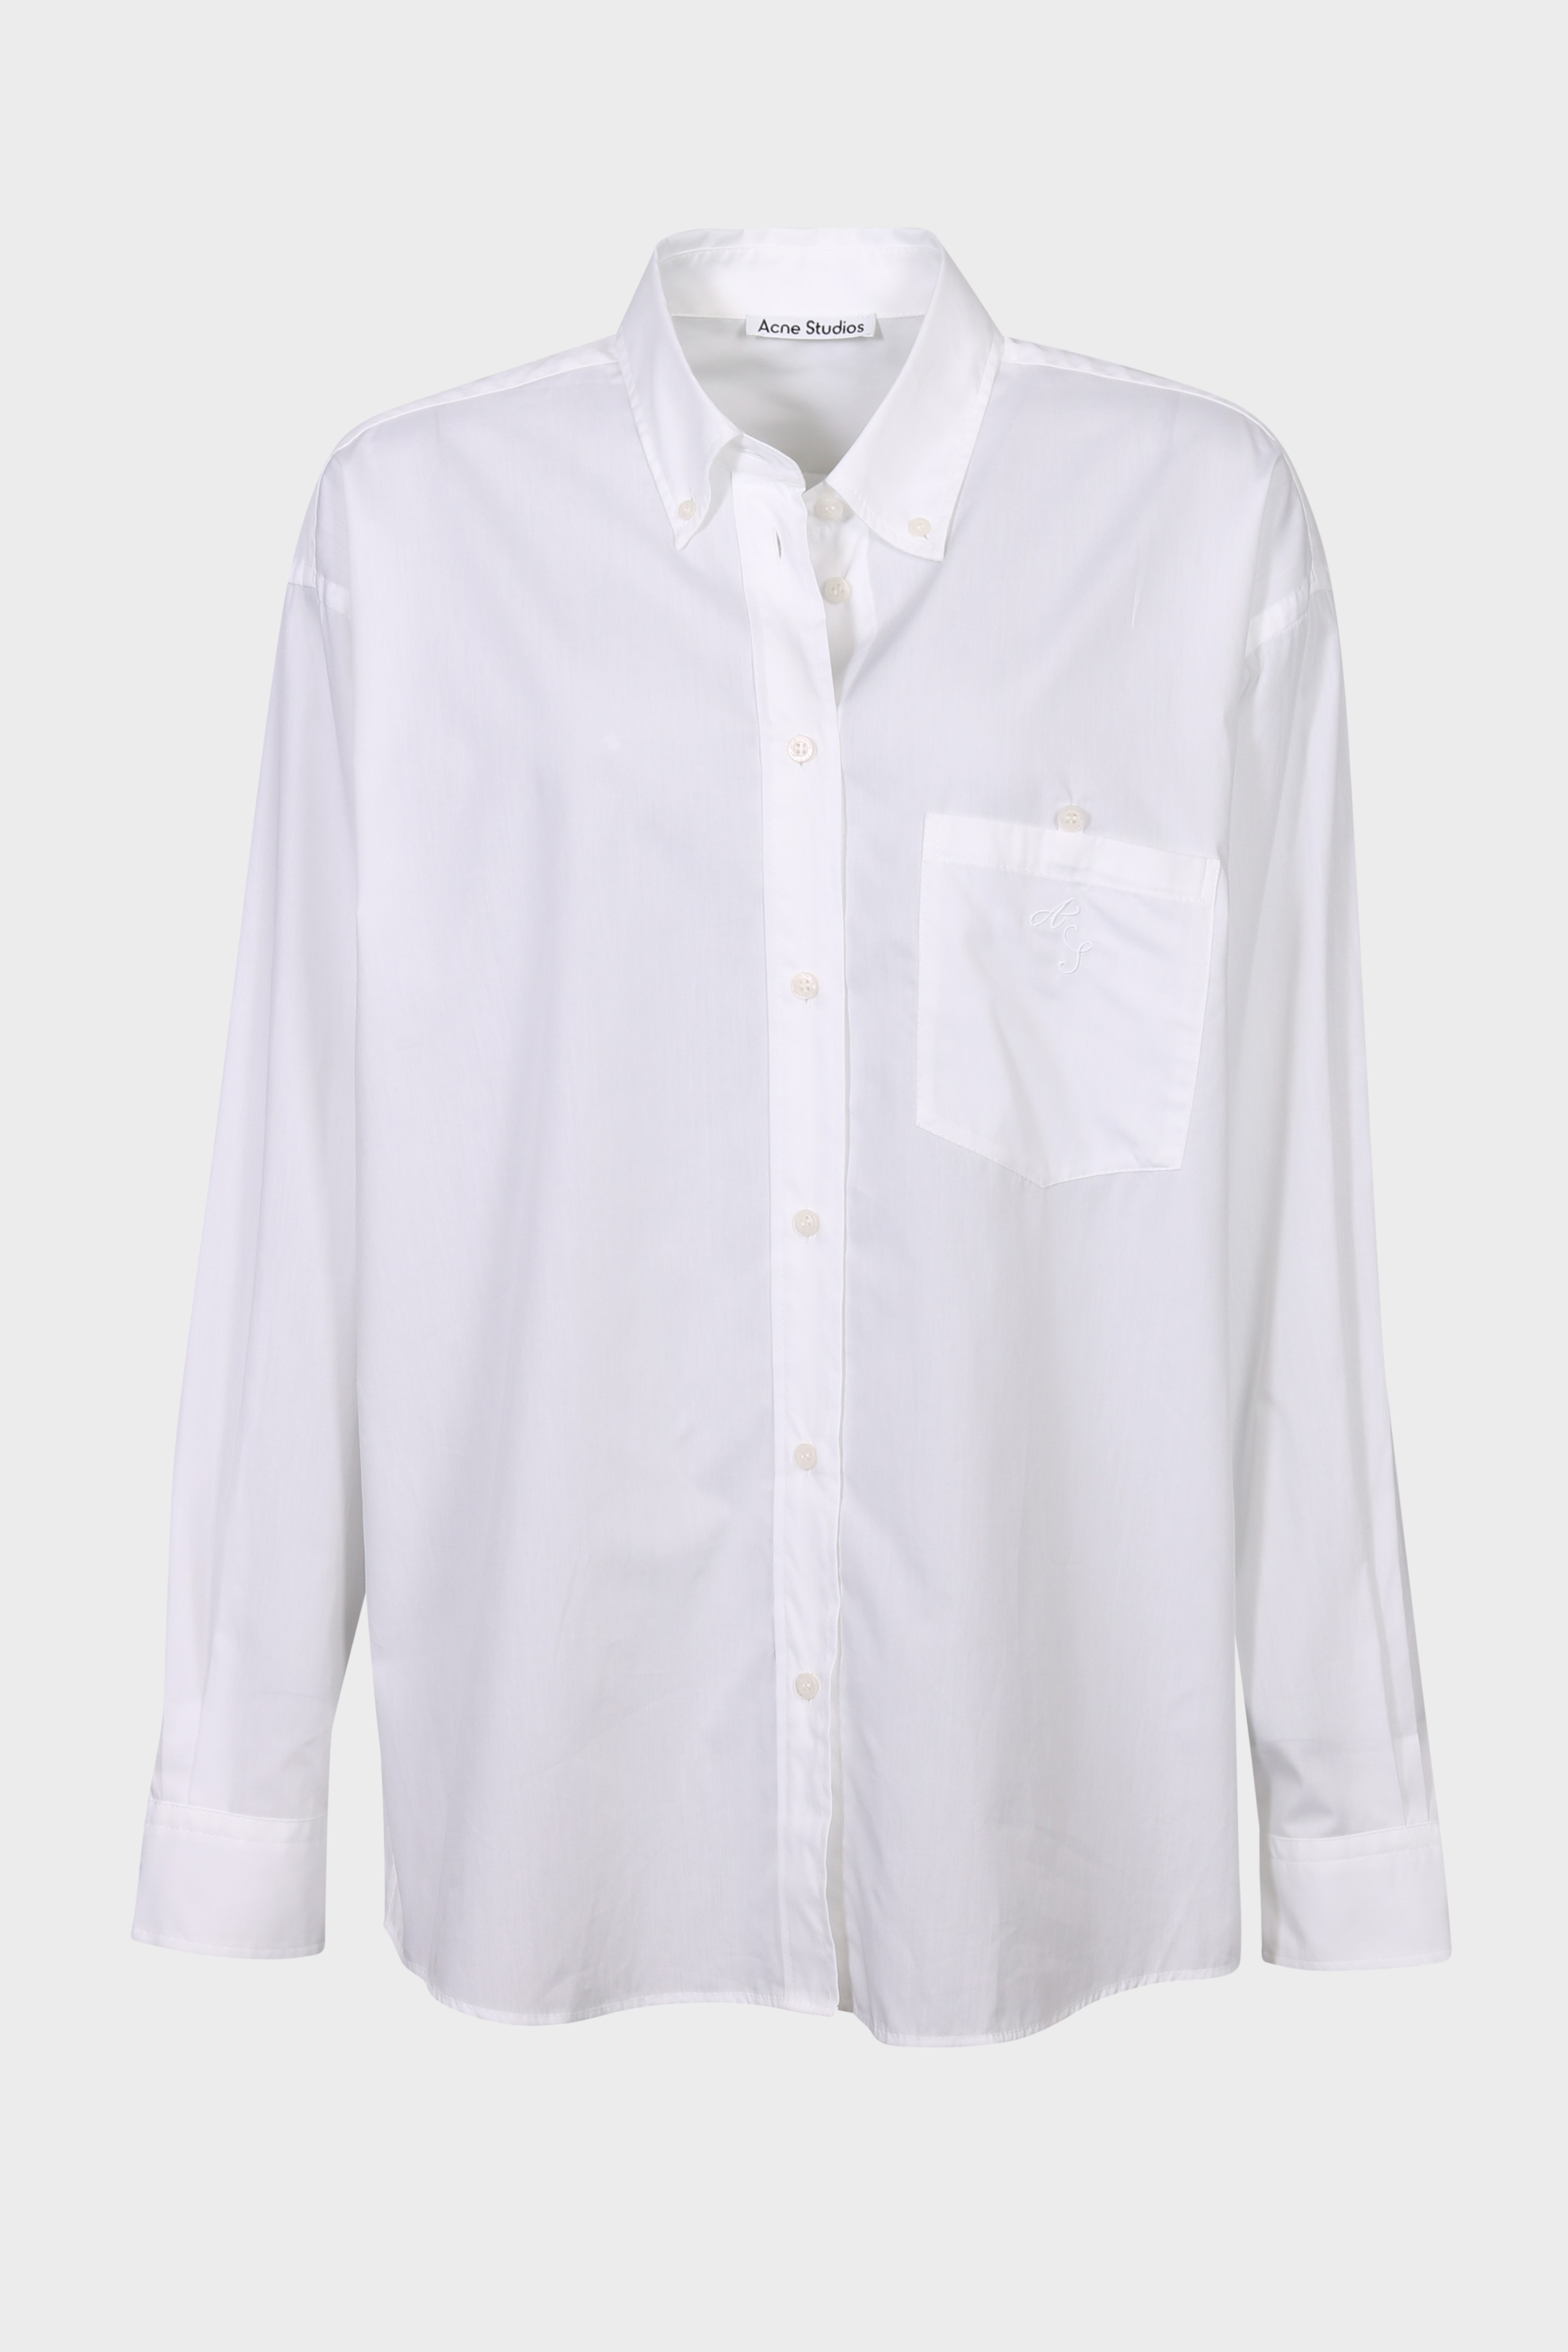 ACNE STUDIOS Oversize Shirt in White